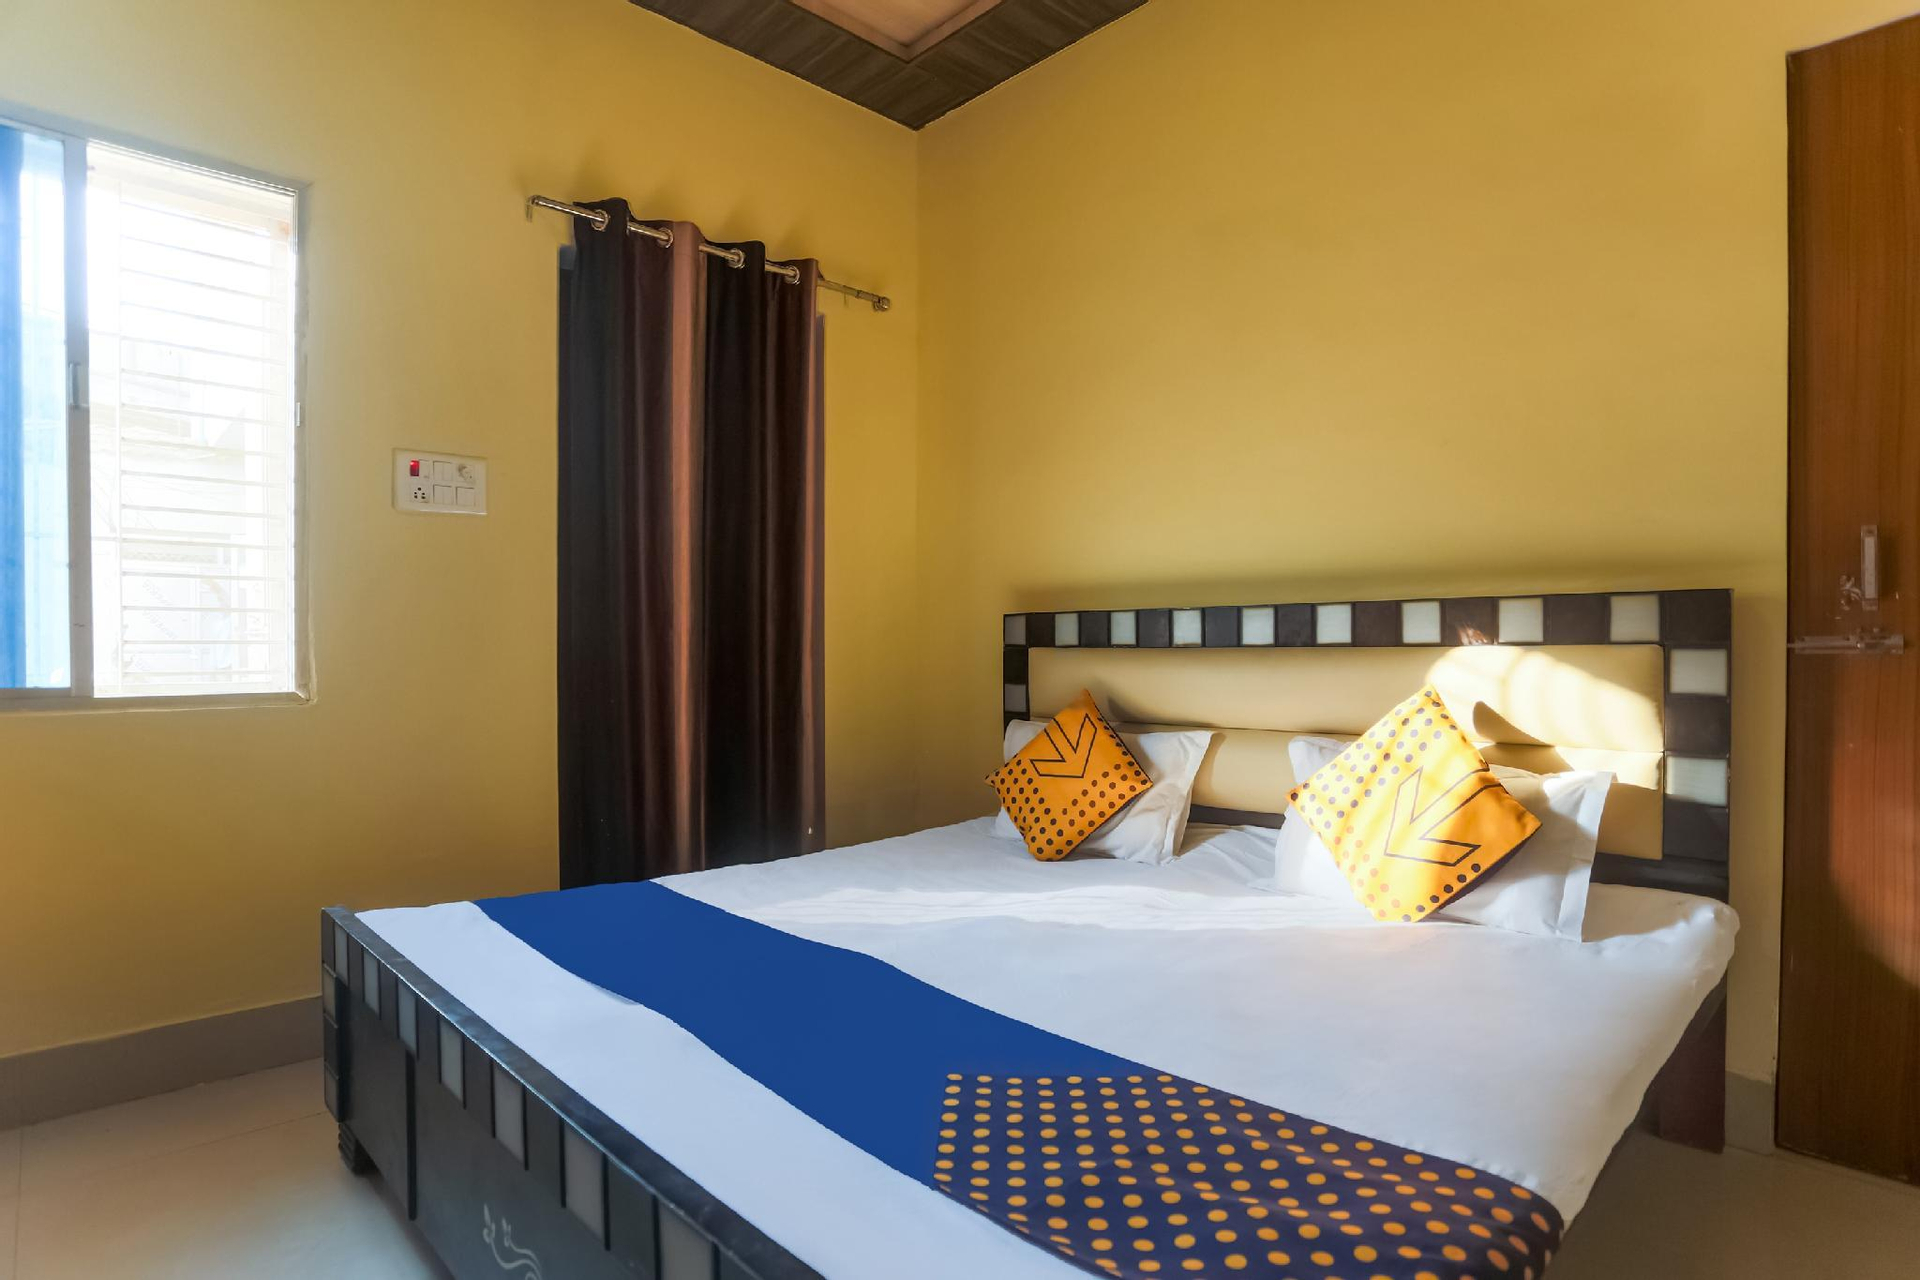 Bedroom 1, SPOT ON 77029 Sahil Palace, Sonbhadra